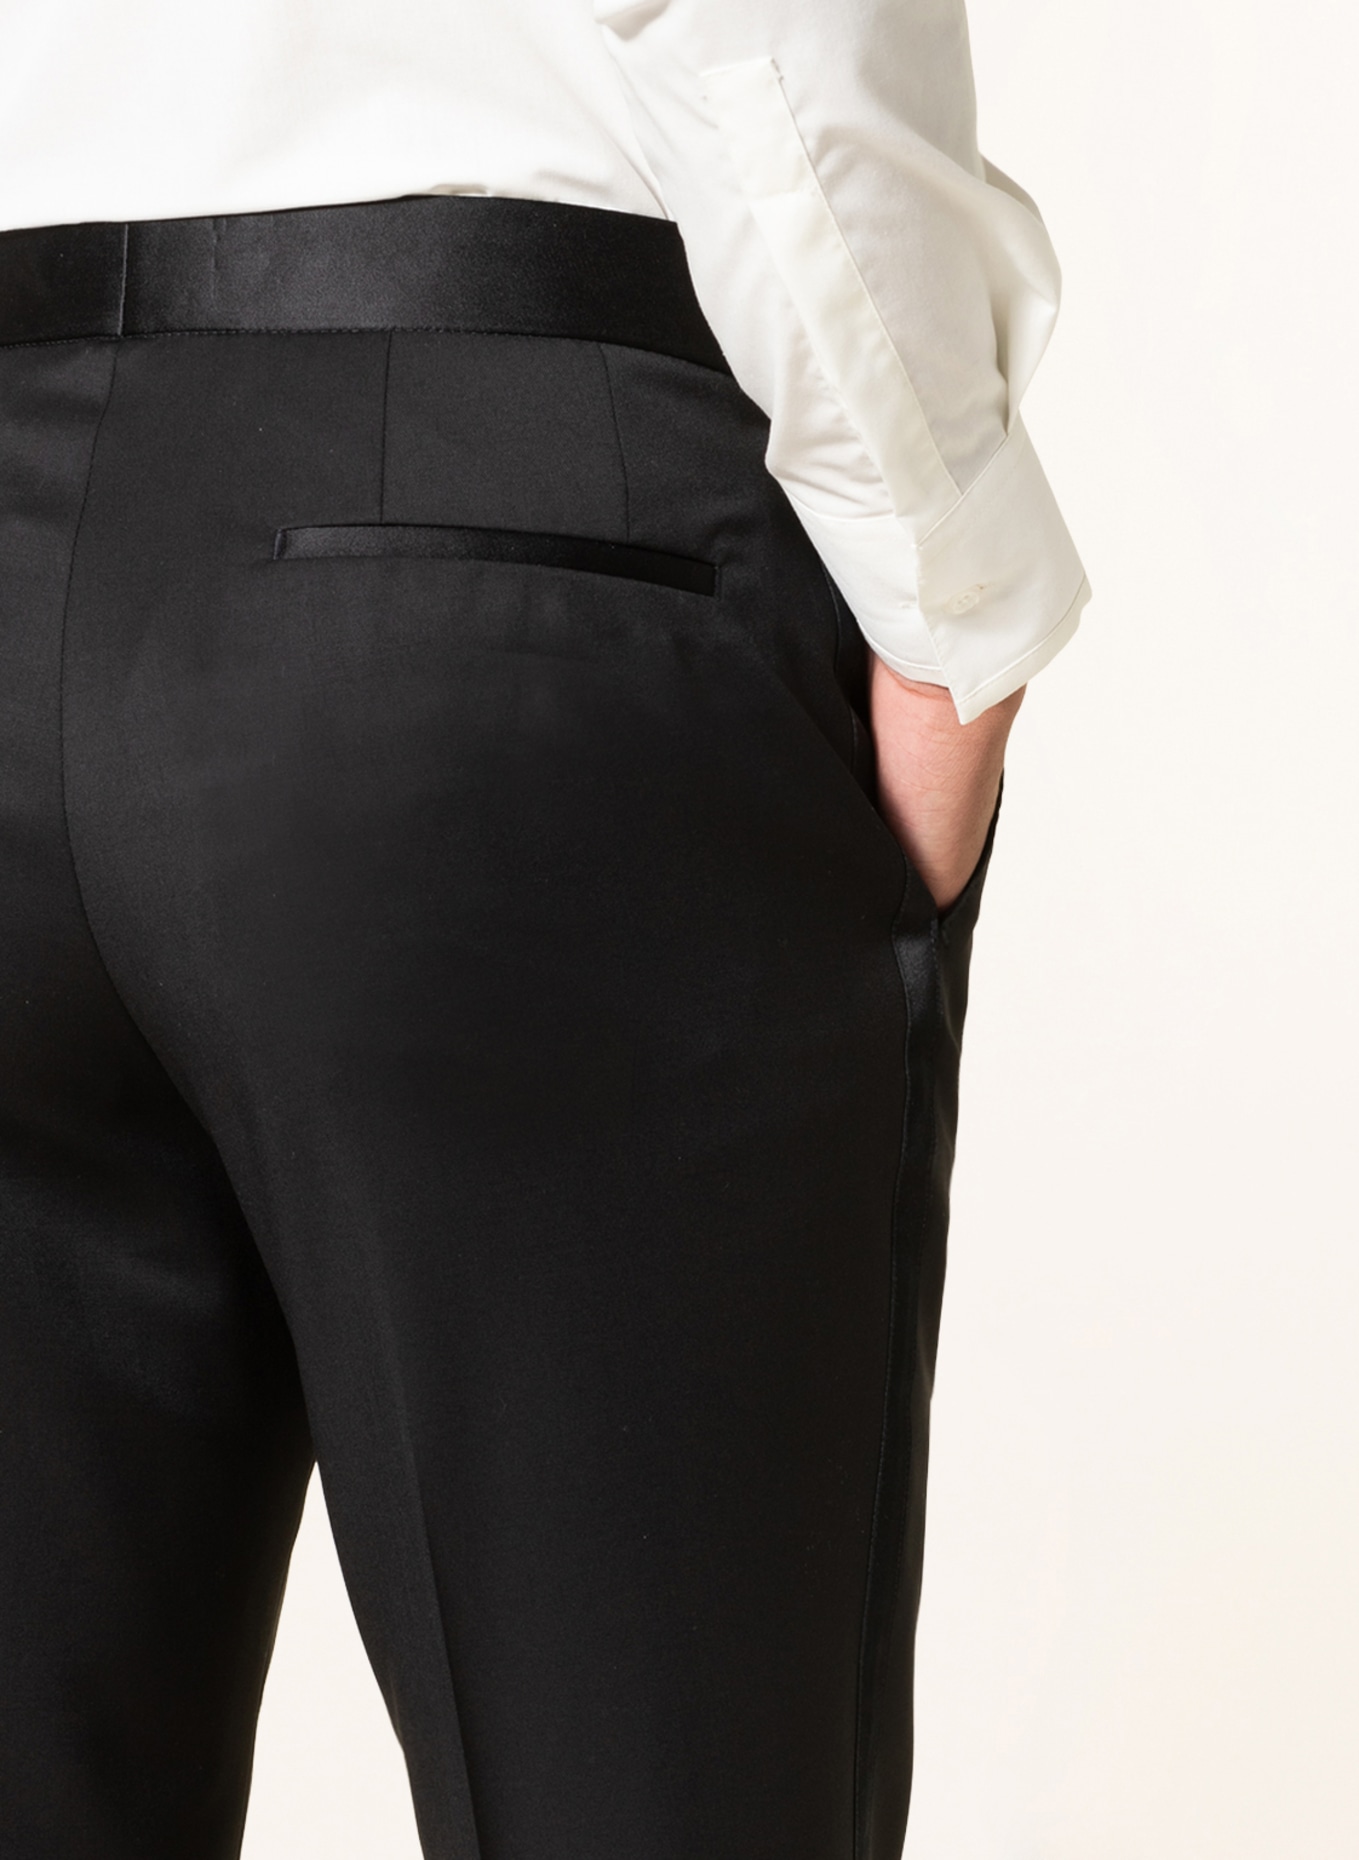 Men's Black Tuxedo Pants 100% Wool Fitted Flat Front 60-62" Waist  Regular Rise | eBay